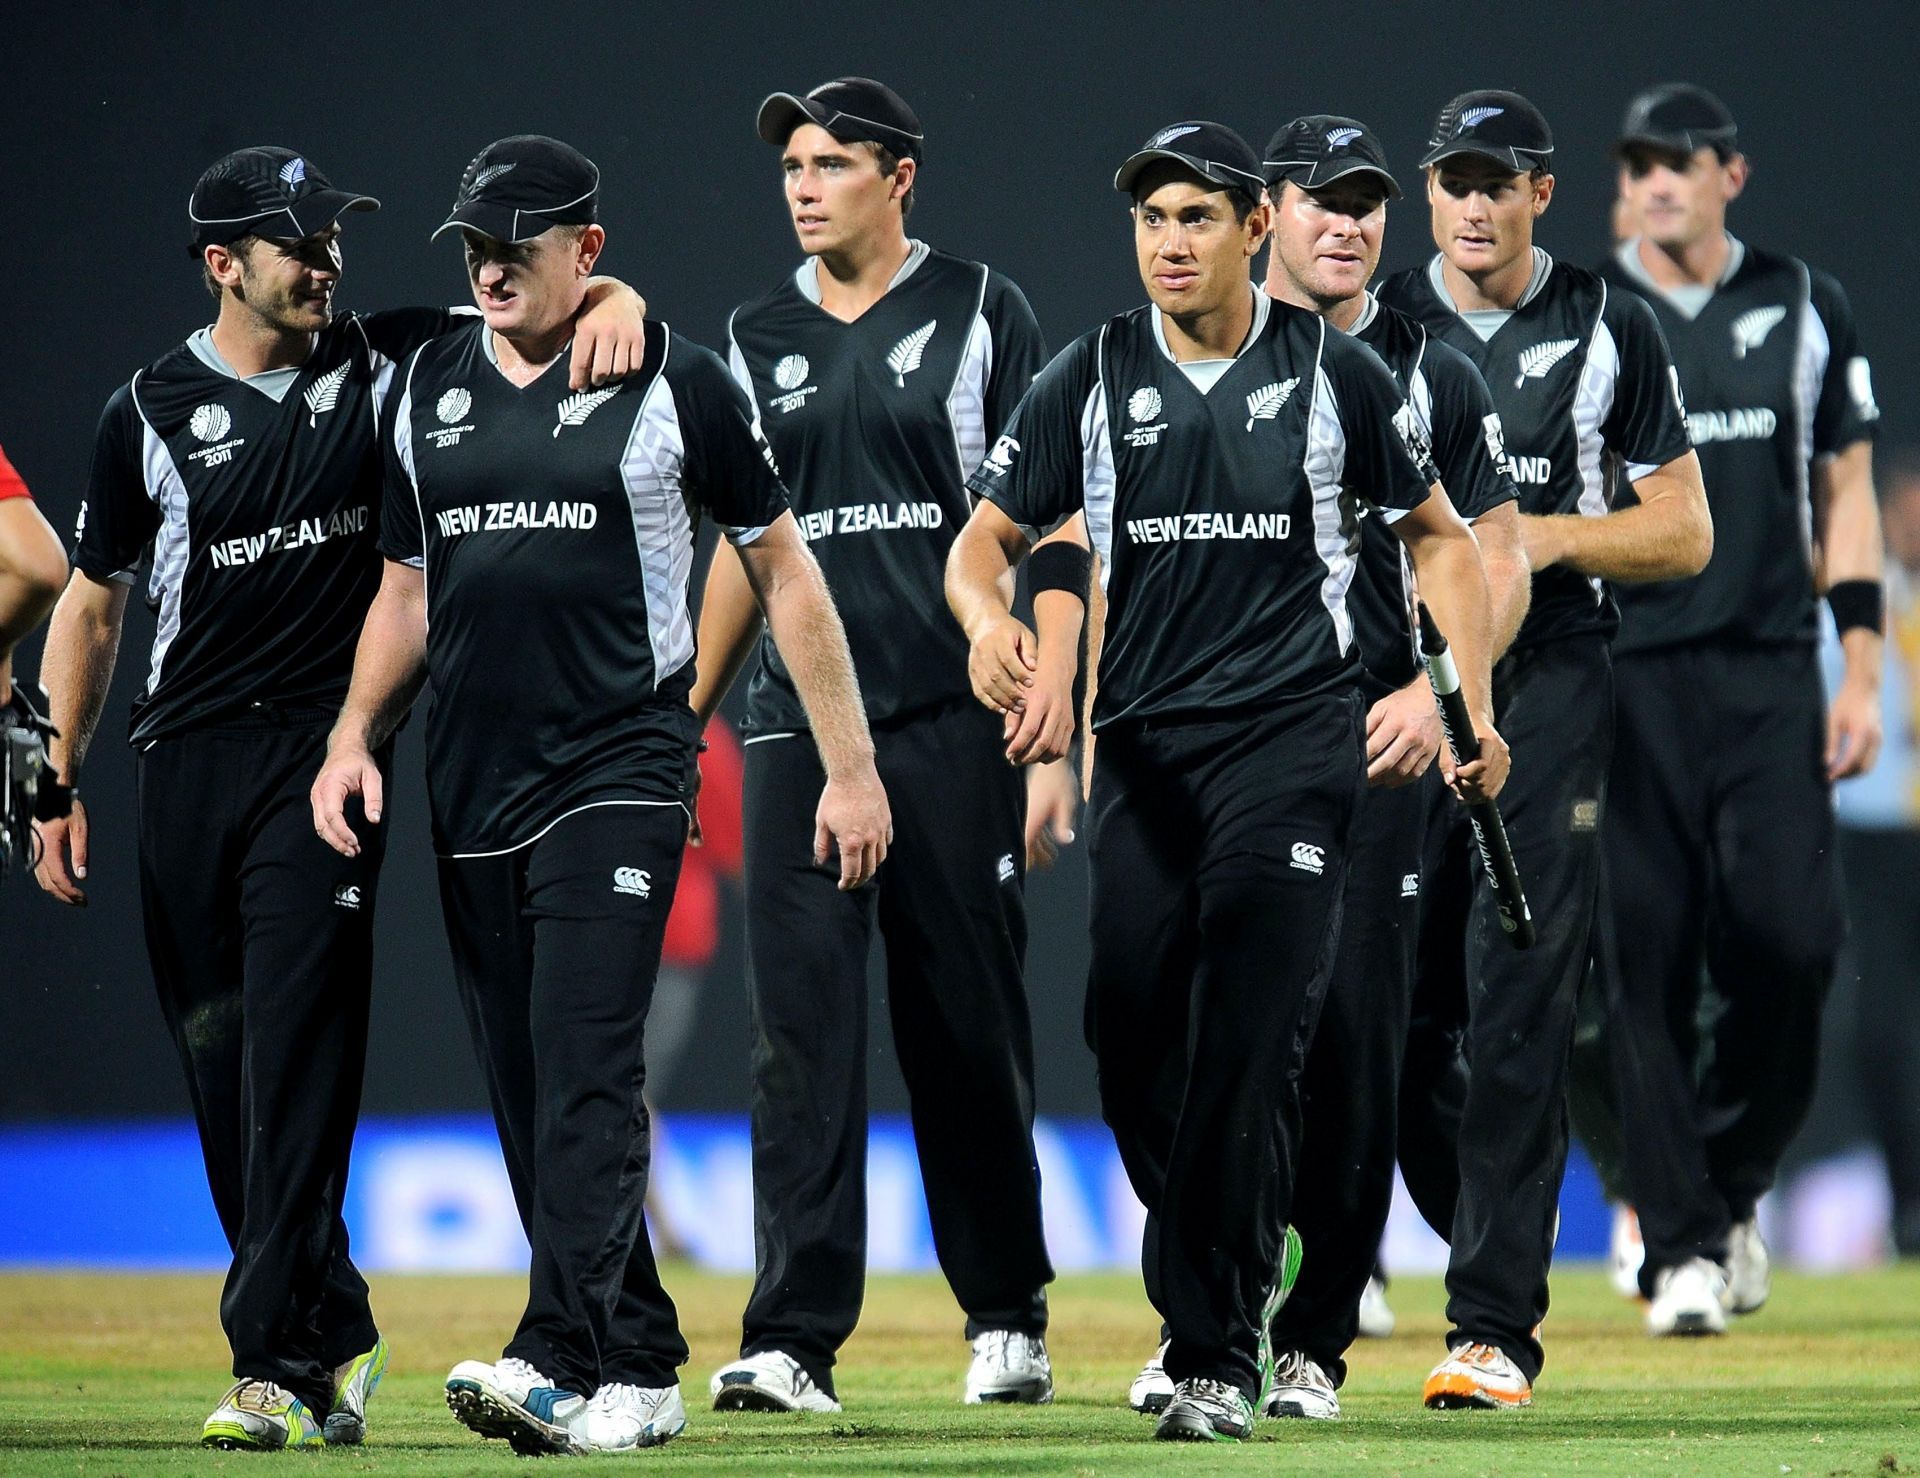 New Zealand had beaten South Africa by 49 runs. (Credits: Twitter)